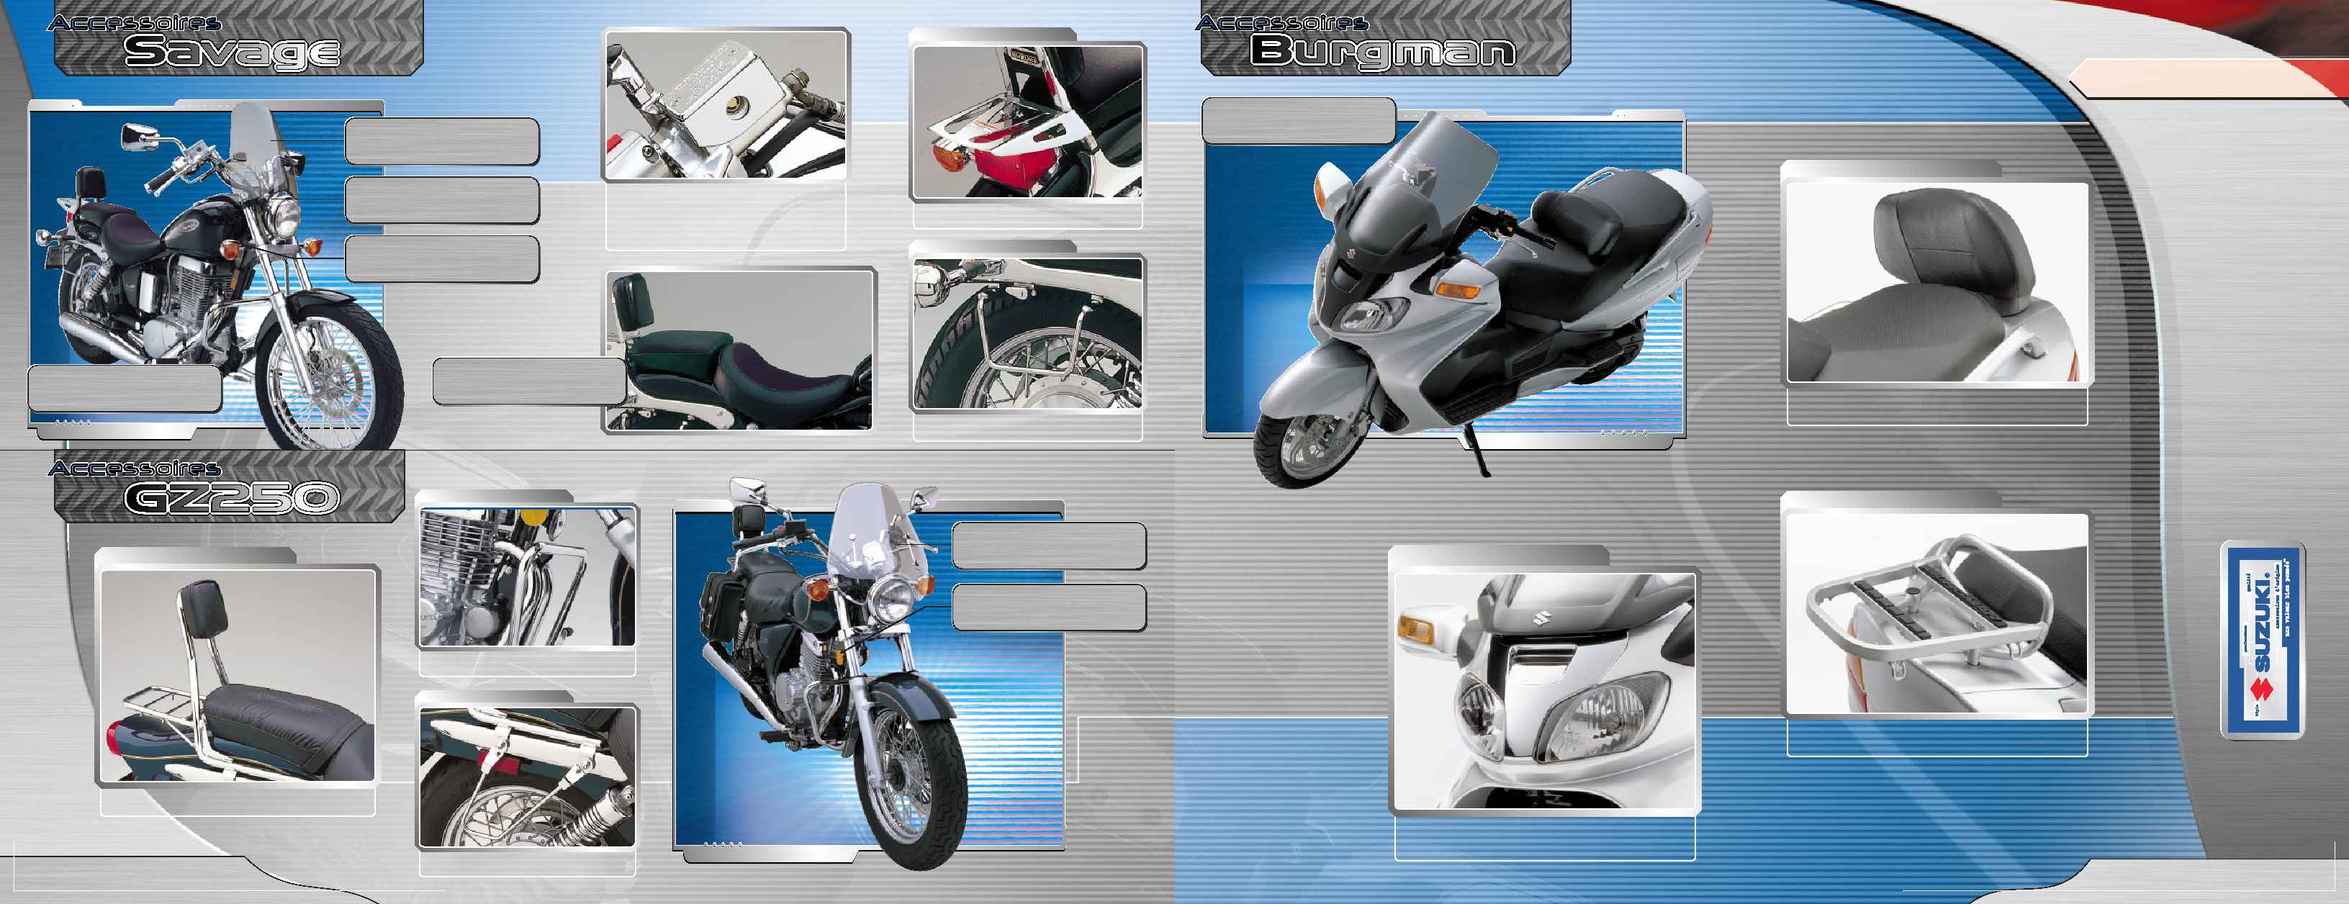 Suzuki - 2003 mc Access brochure F